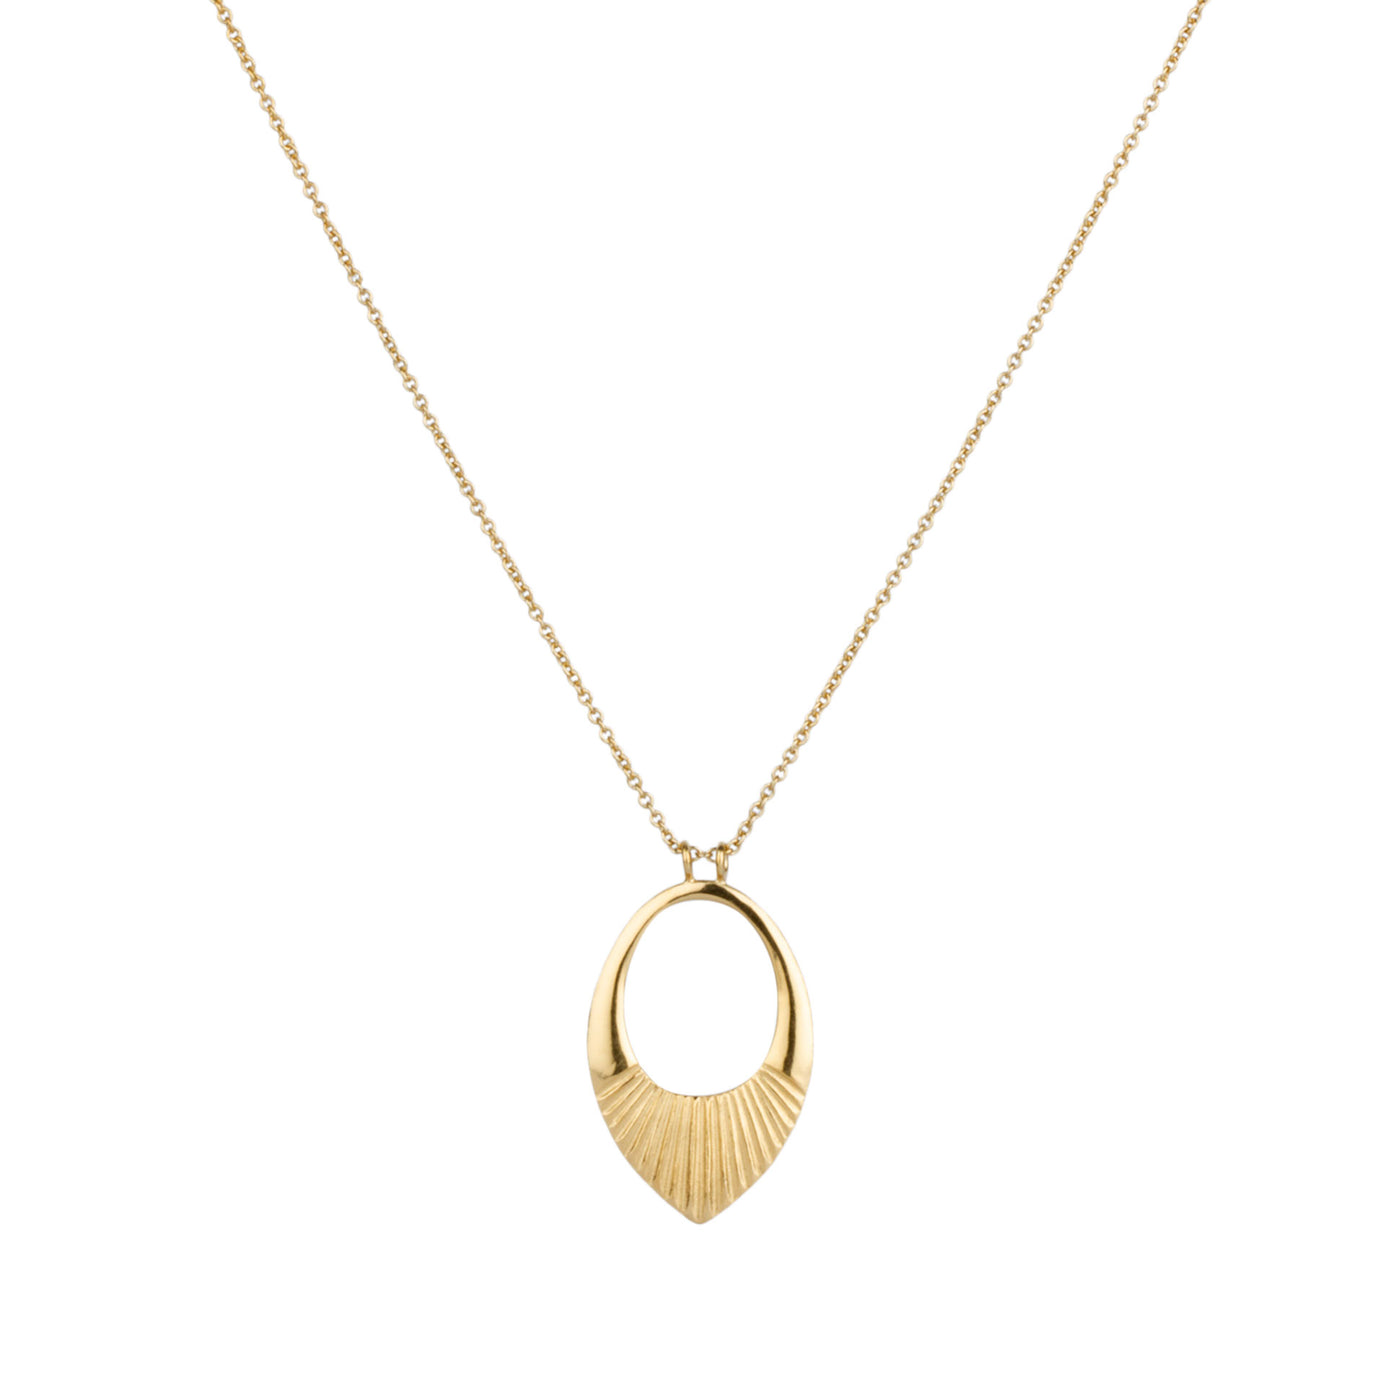 Gold vermeil medium open petal shape pendant with a textured bottom on a 22" silver chain